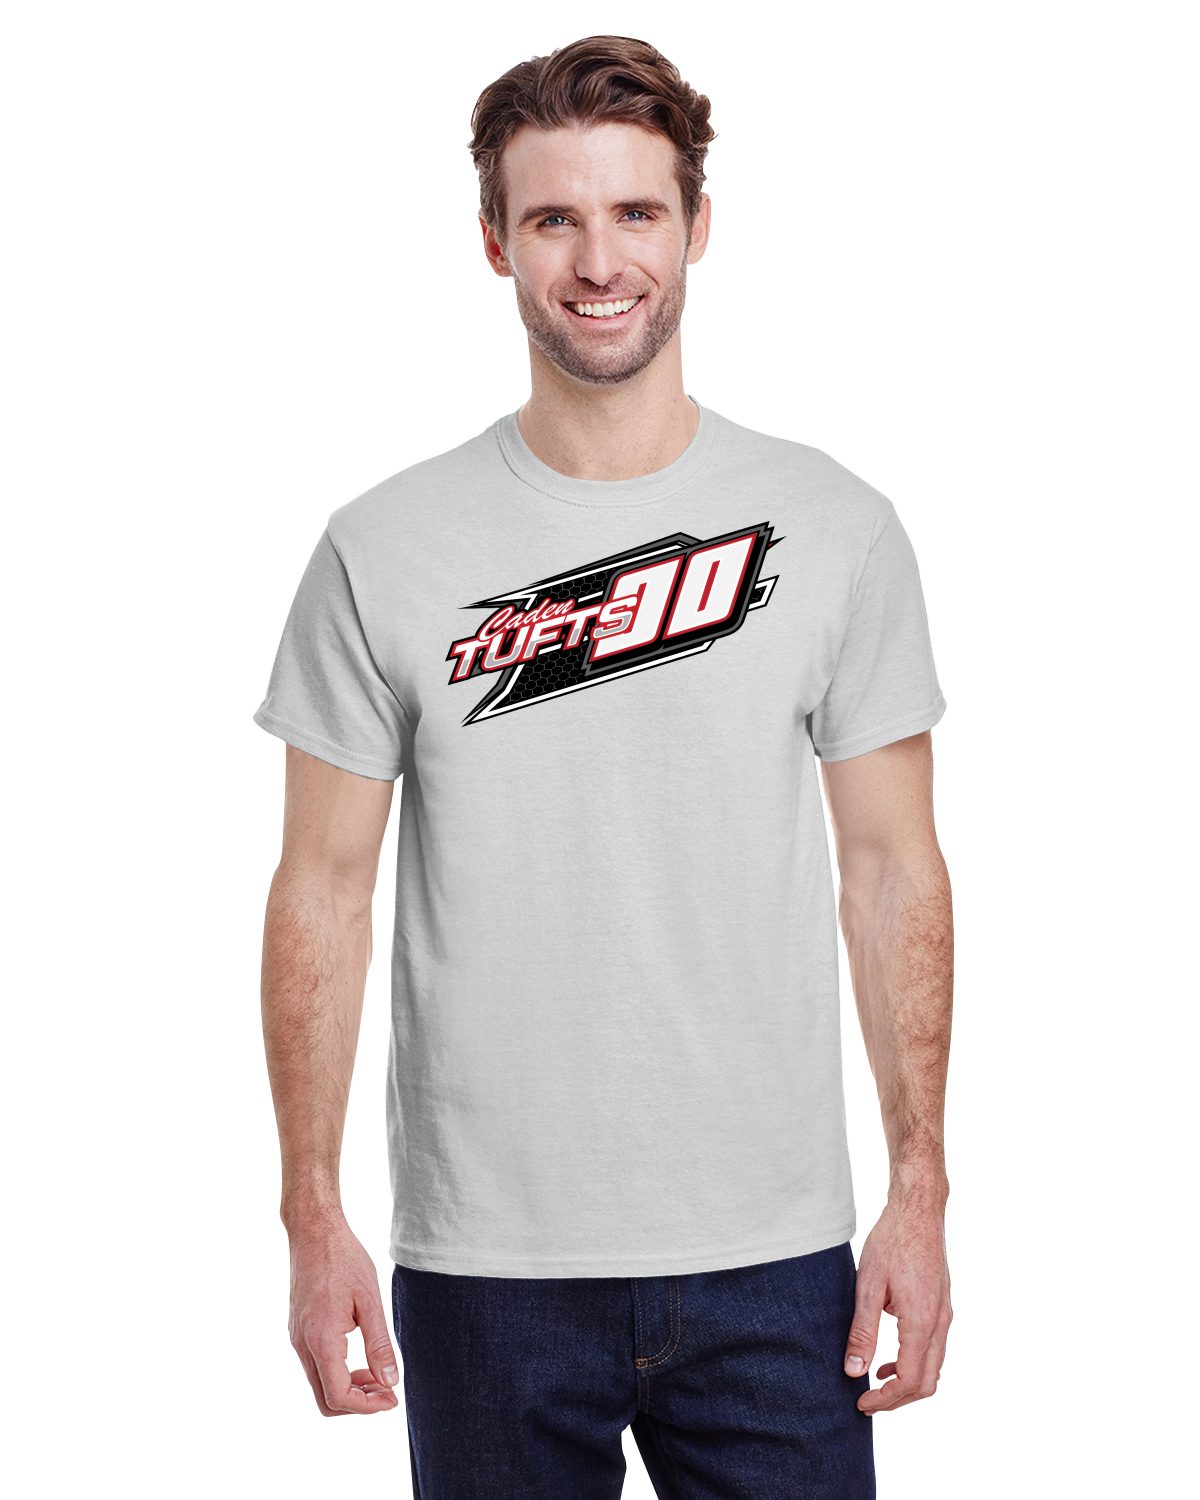 Caden Tufts Legends Racing Adult T-shirt